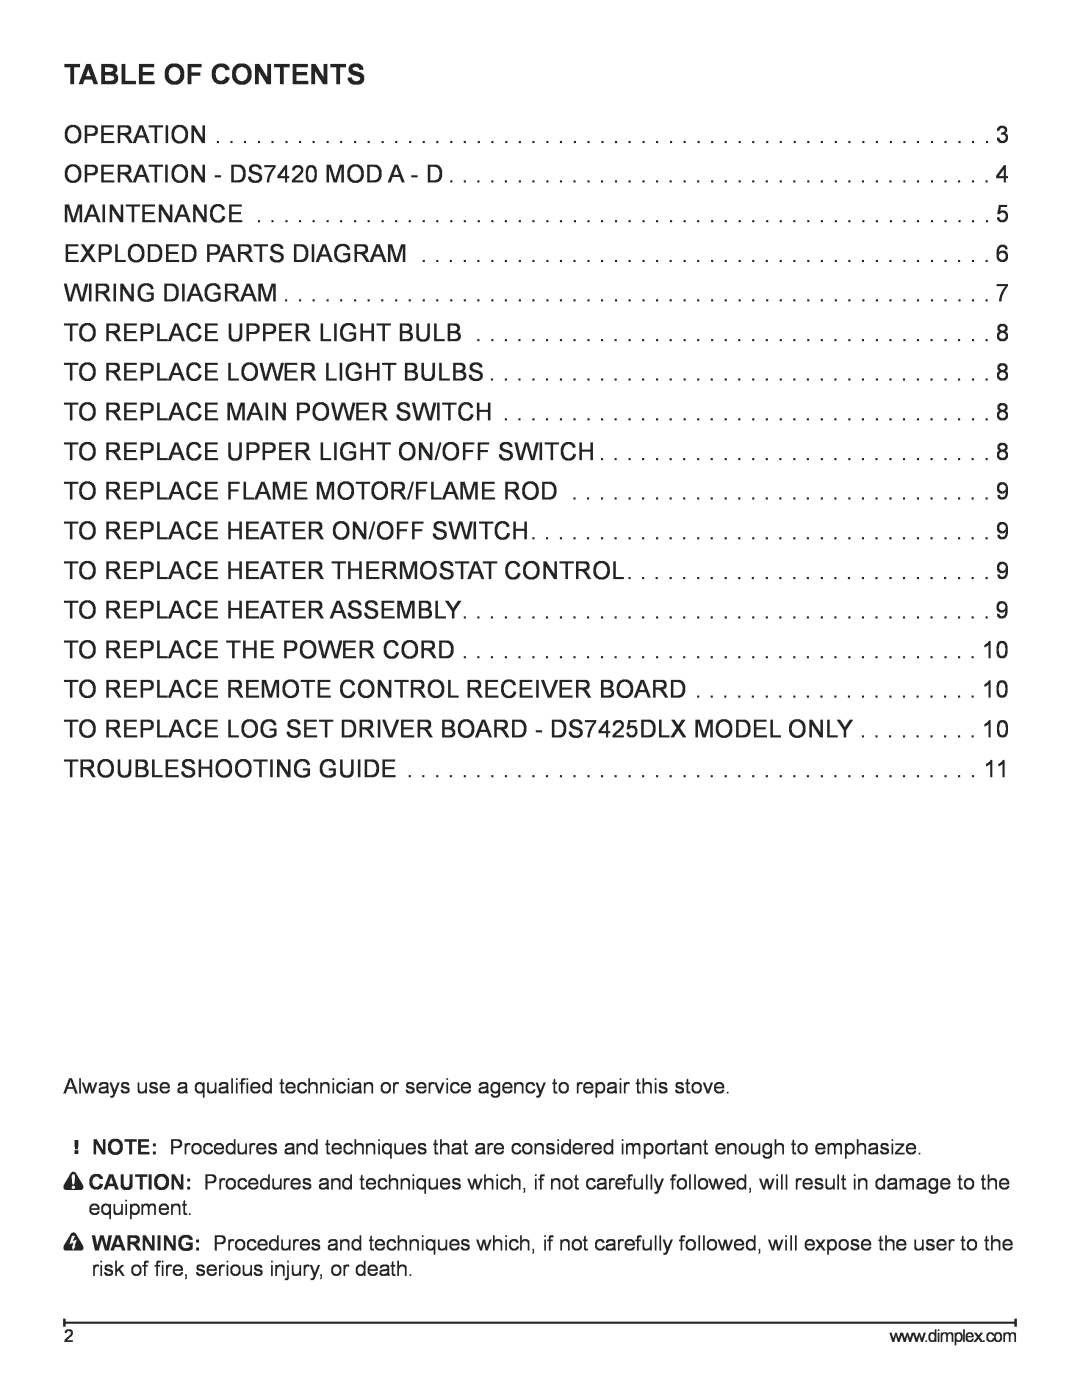 Dimplex DS7420, DS7425DLX service manual Table Of Contents 